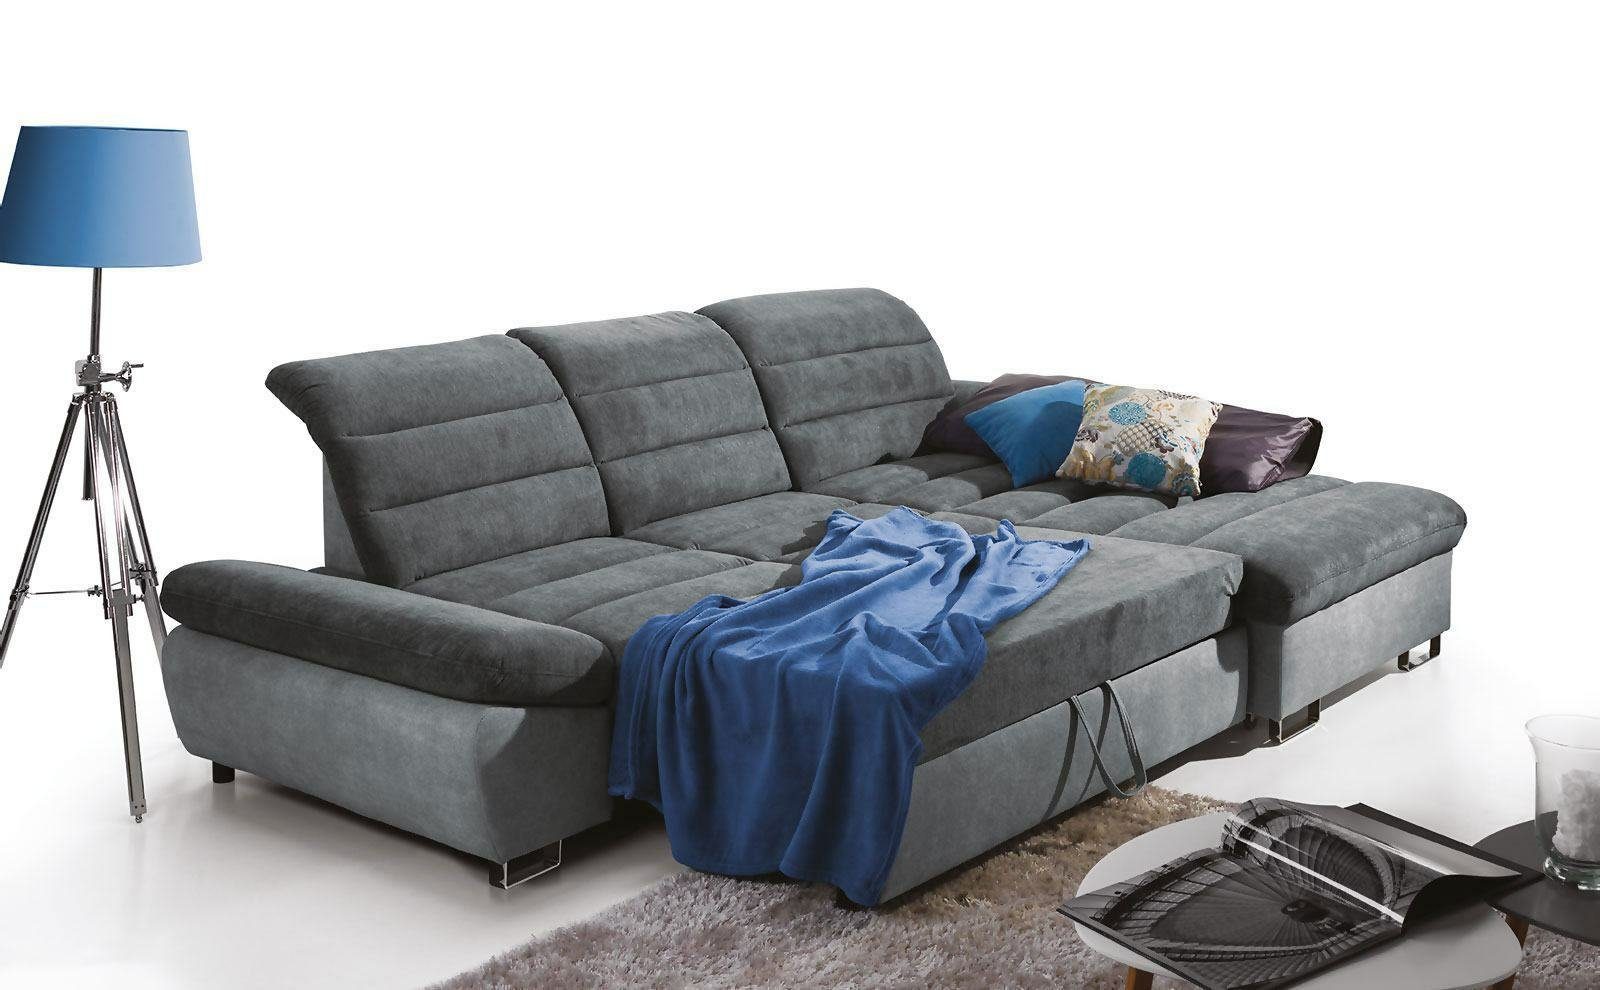 JVmoebel Ecksofa, Wohnlandschaft Textil Ecksofa Garnitur Couch Moderne Eck Polster